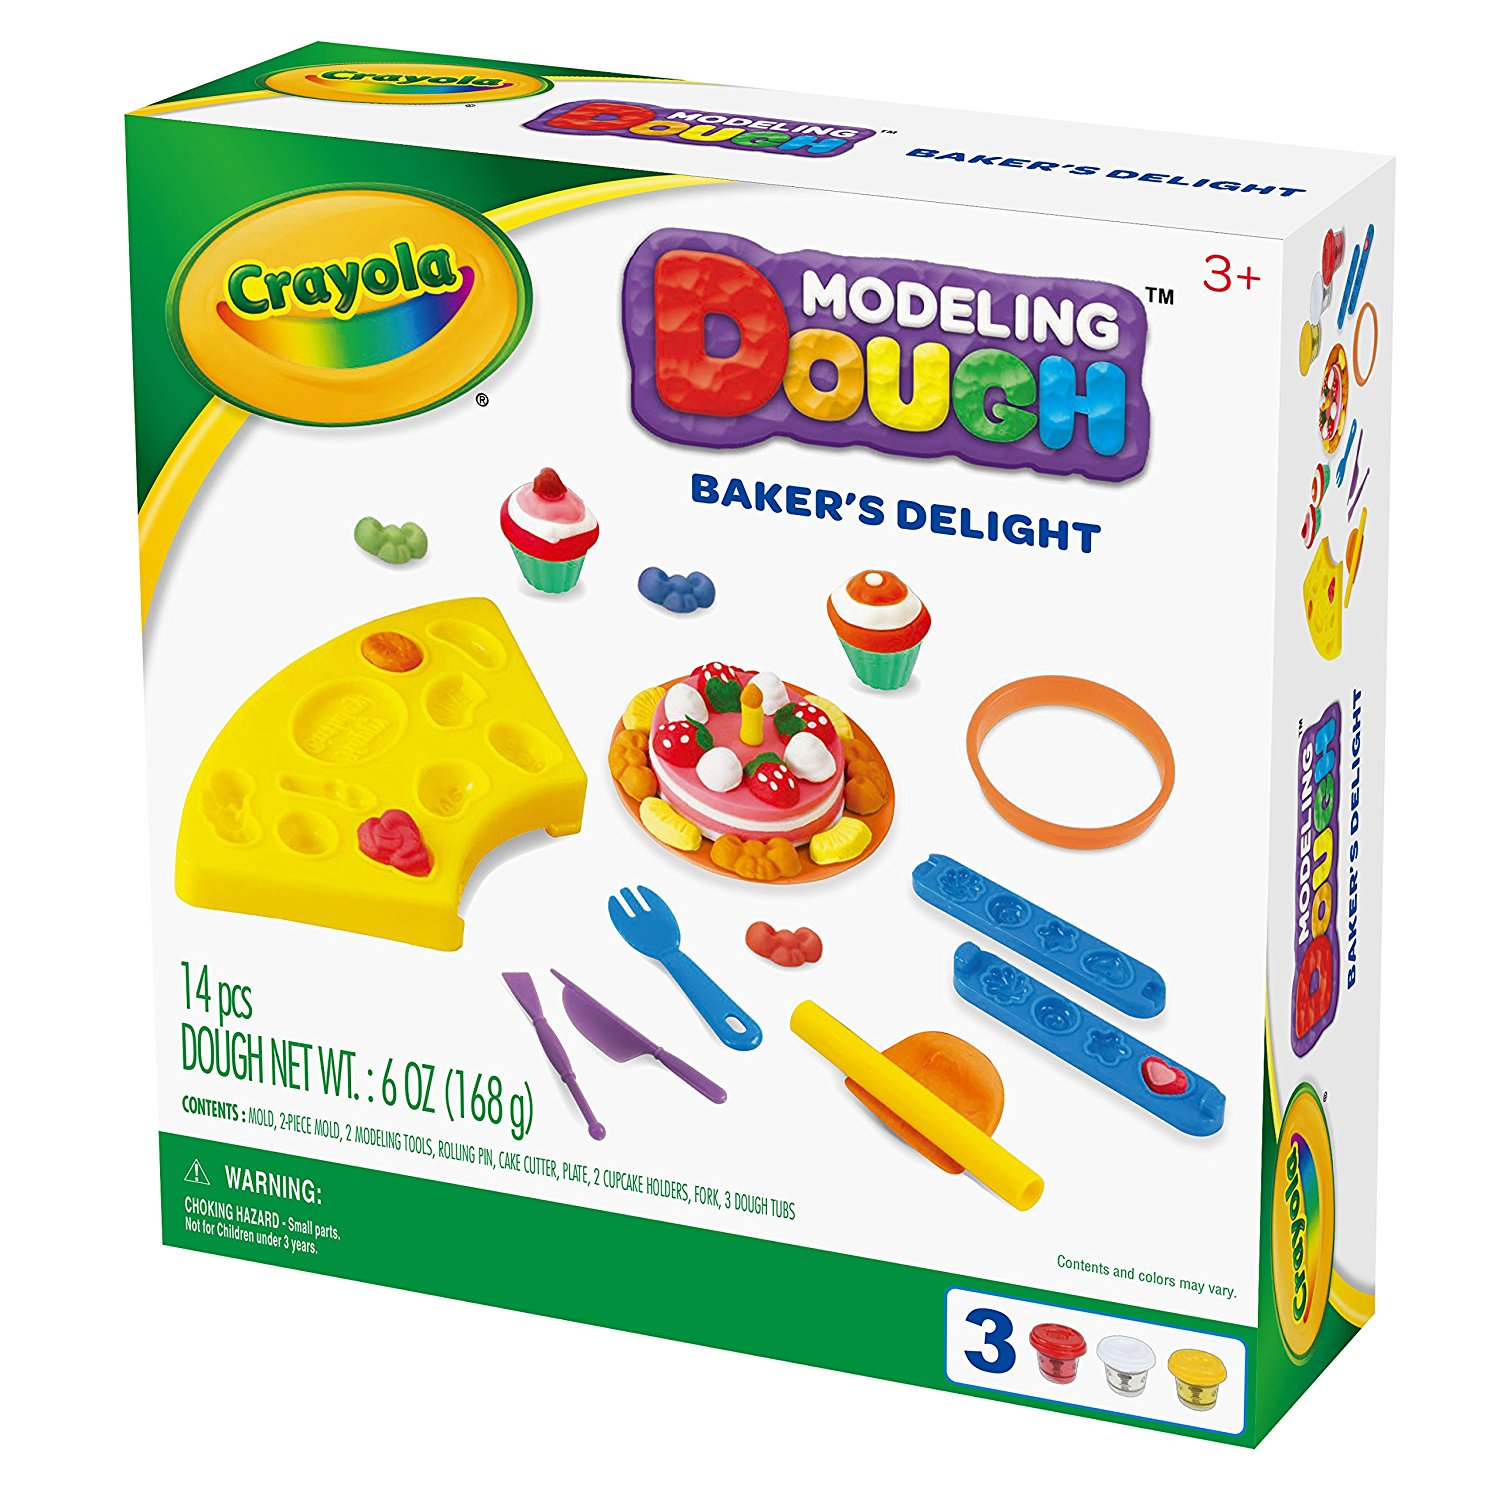 Crayola Modeling Dough Bakers Delight Kit Only $5.50! (Reg $14.99)